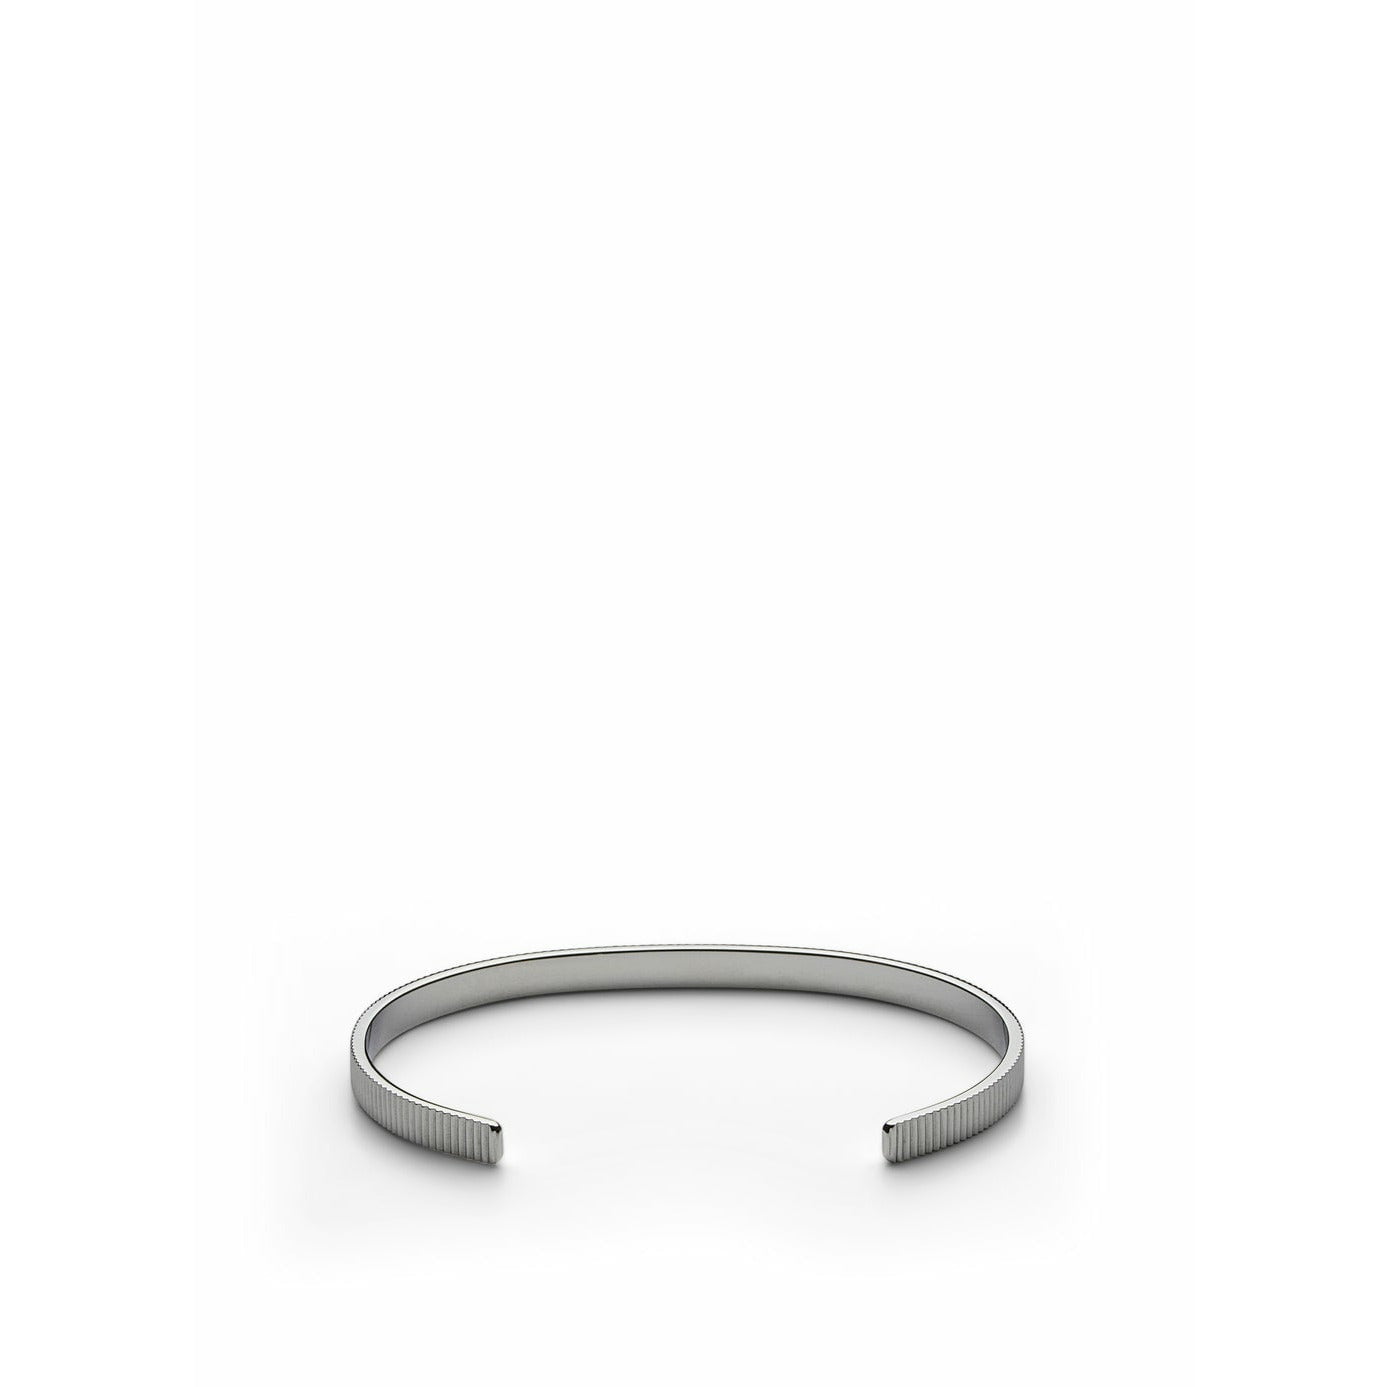 Skultuna geripptes dünnes Armband großer polierter Stahl, Ø18,5 cm